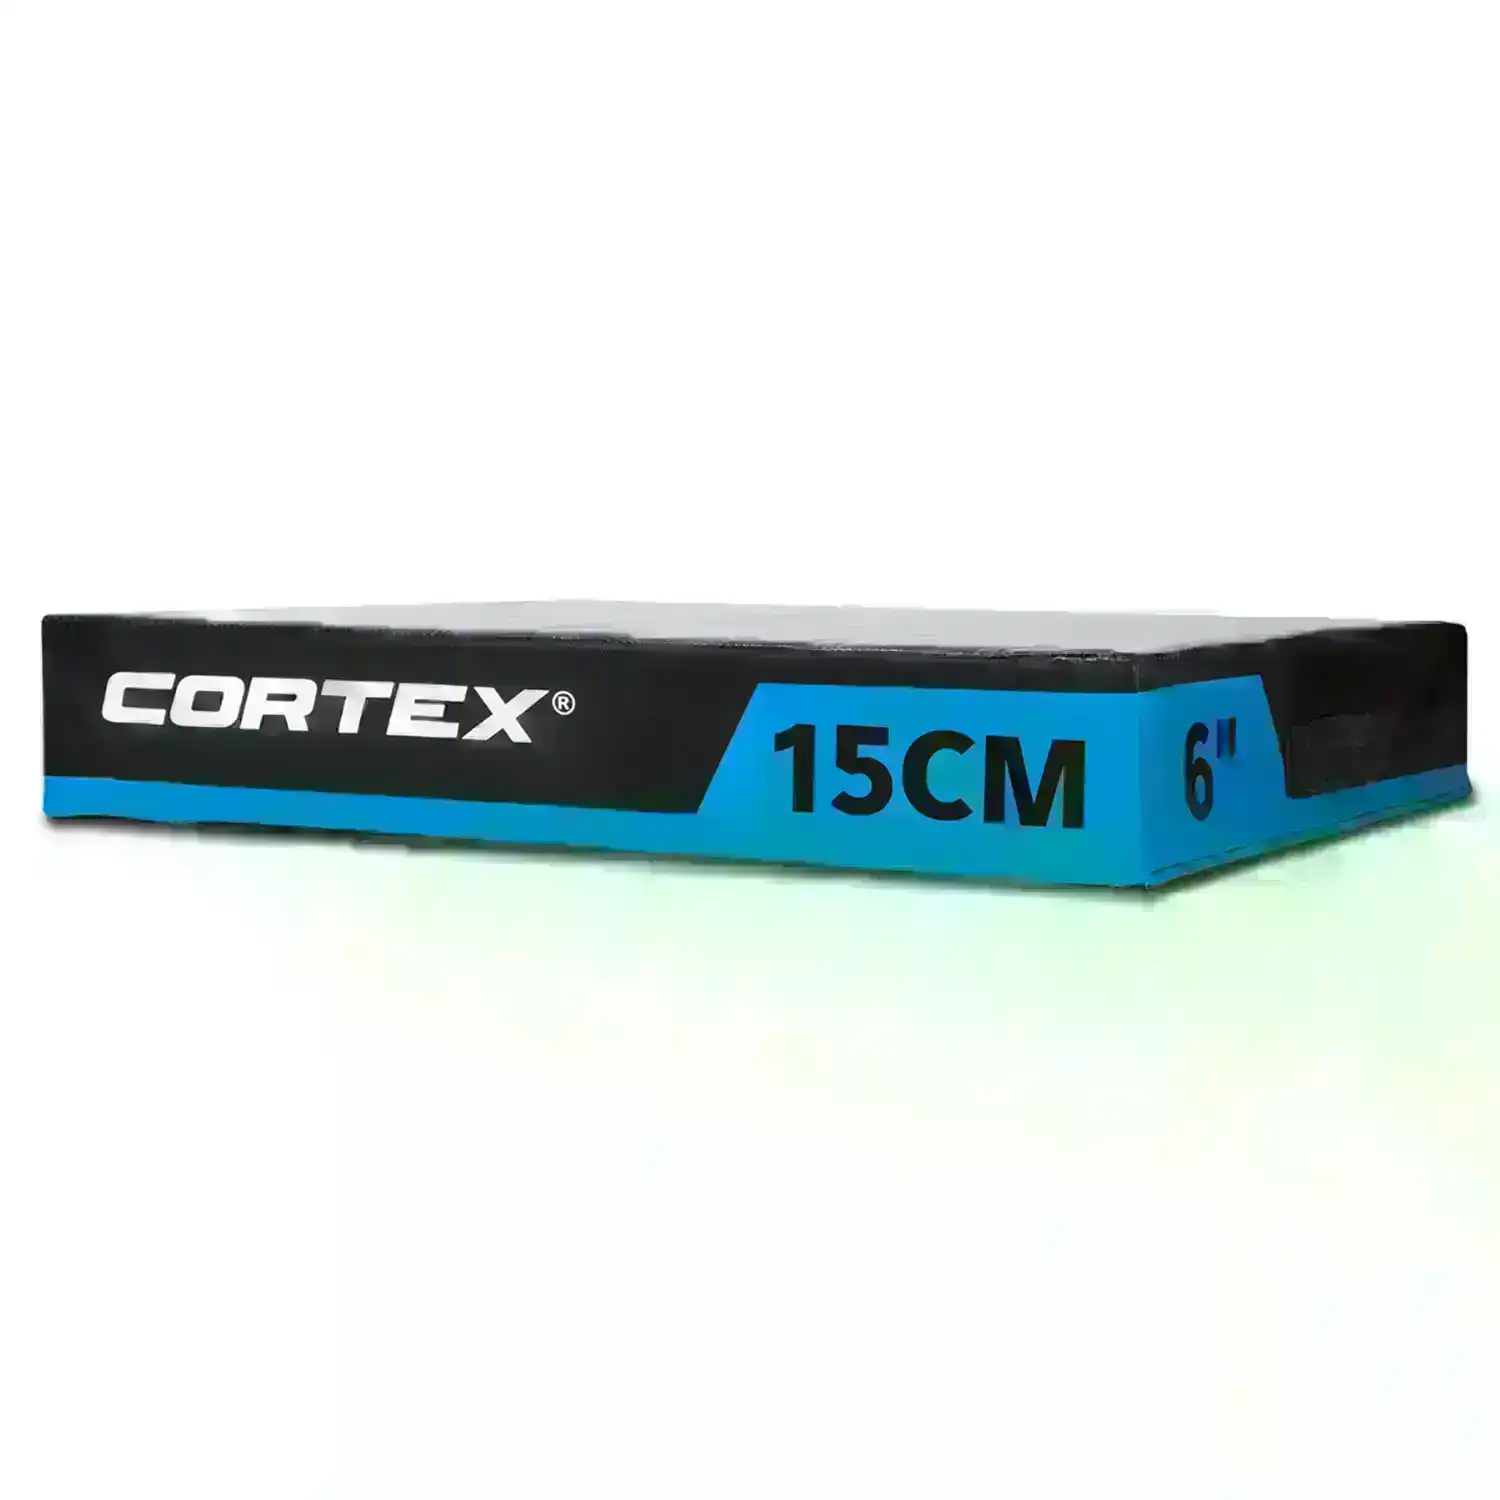 Cortex Soft Plyo Box Modular Stackable 15cm